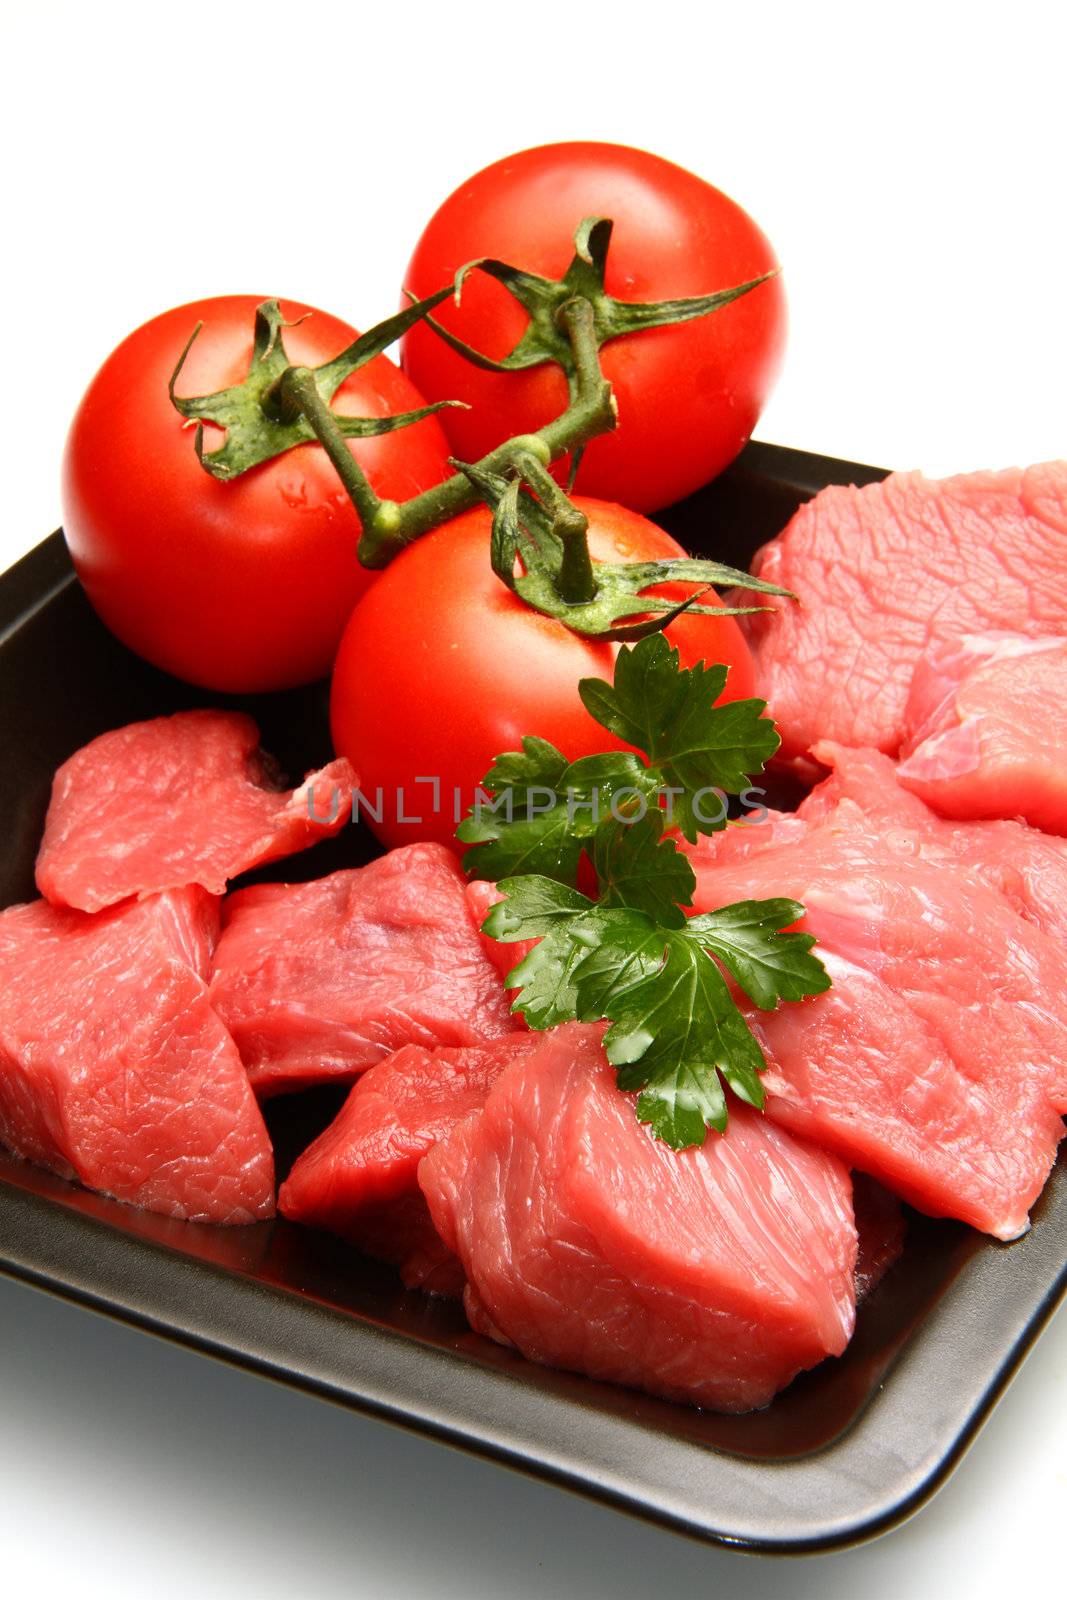 raw meat by lsantilli